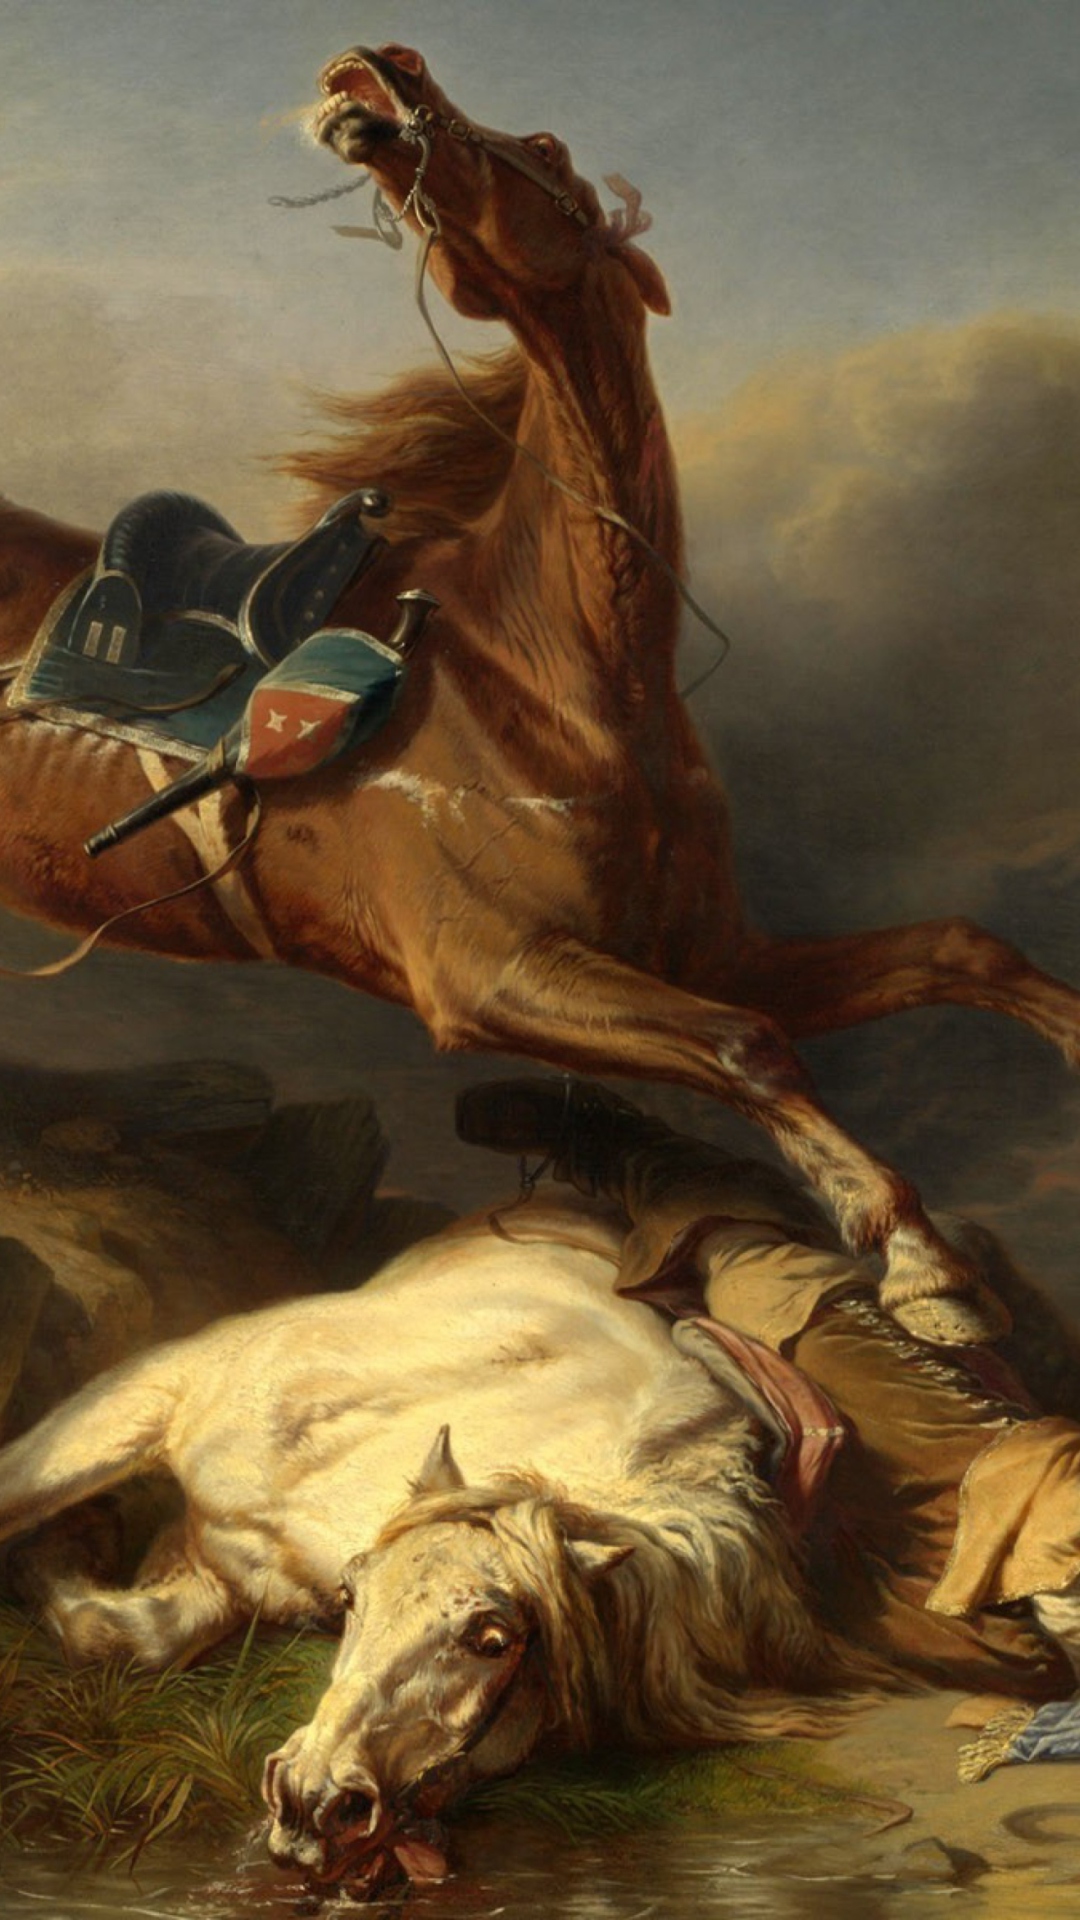 Das Horses Painting Wallpaper 1080x1920